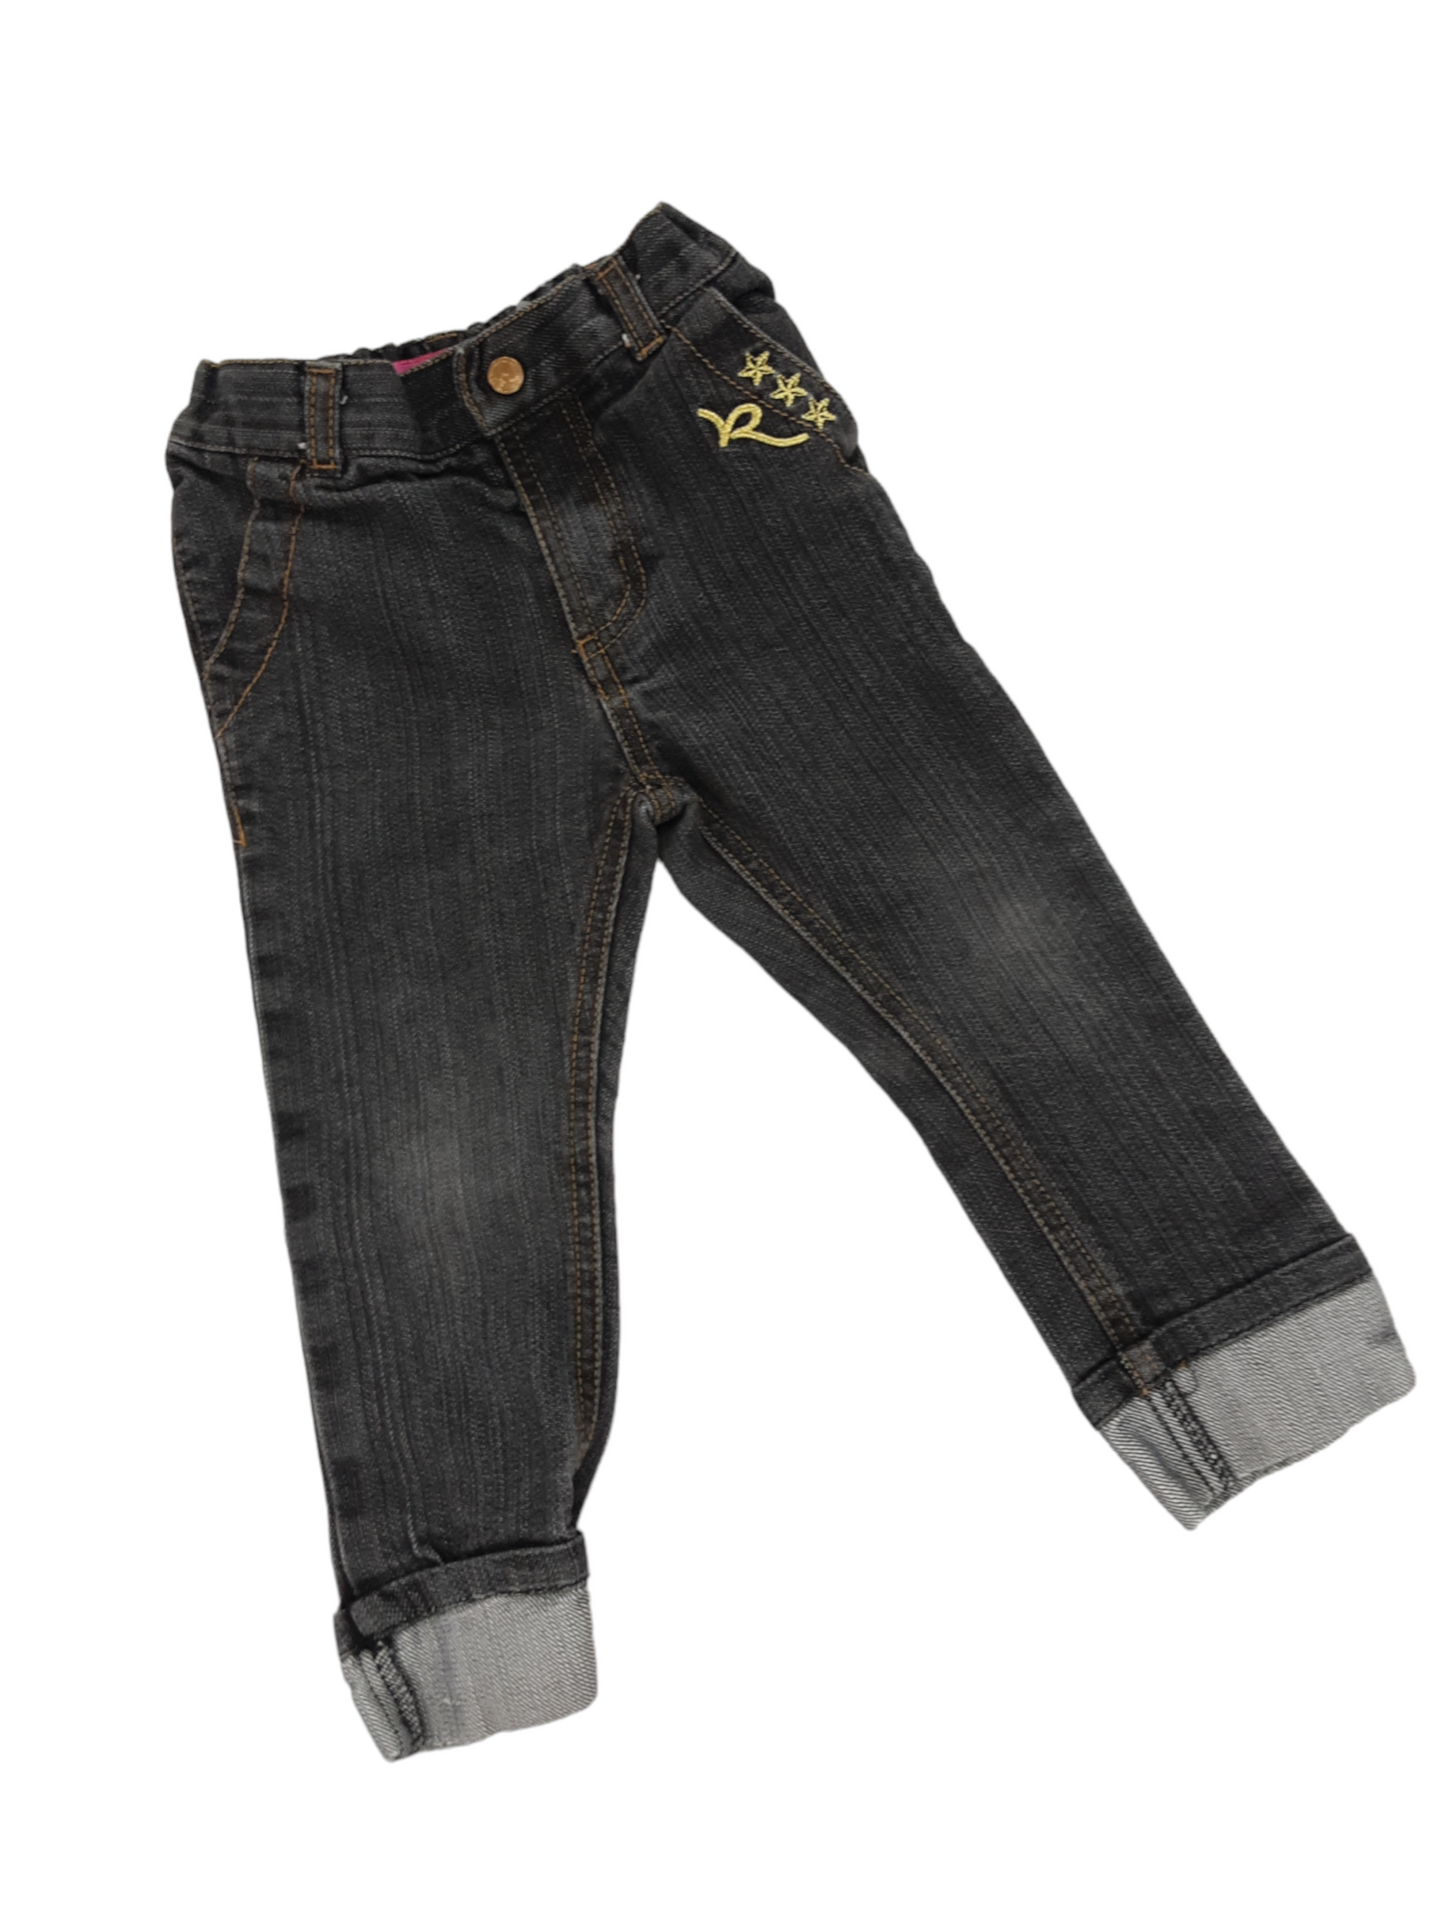 Rockin stretchy waist jeans size 24 months